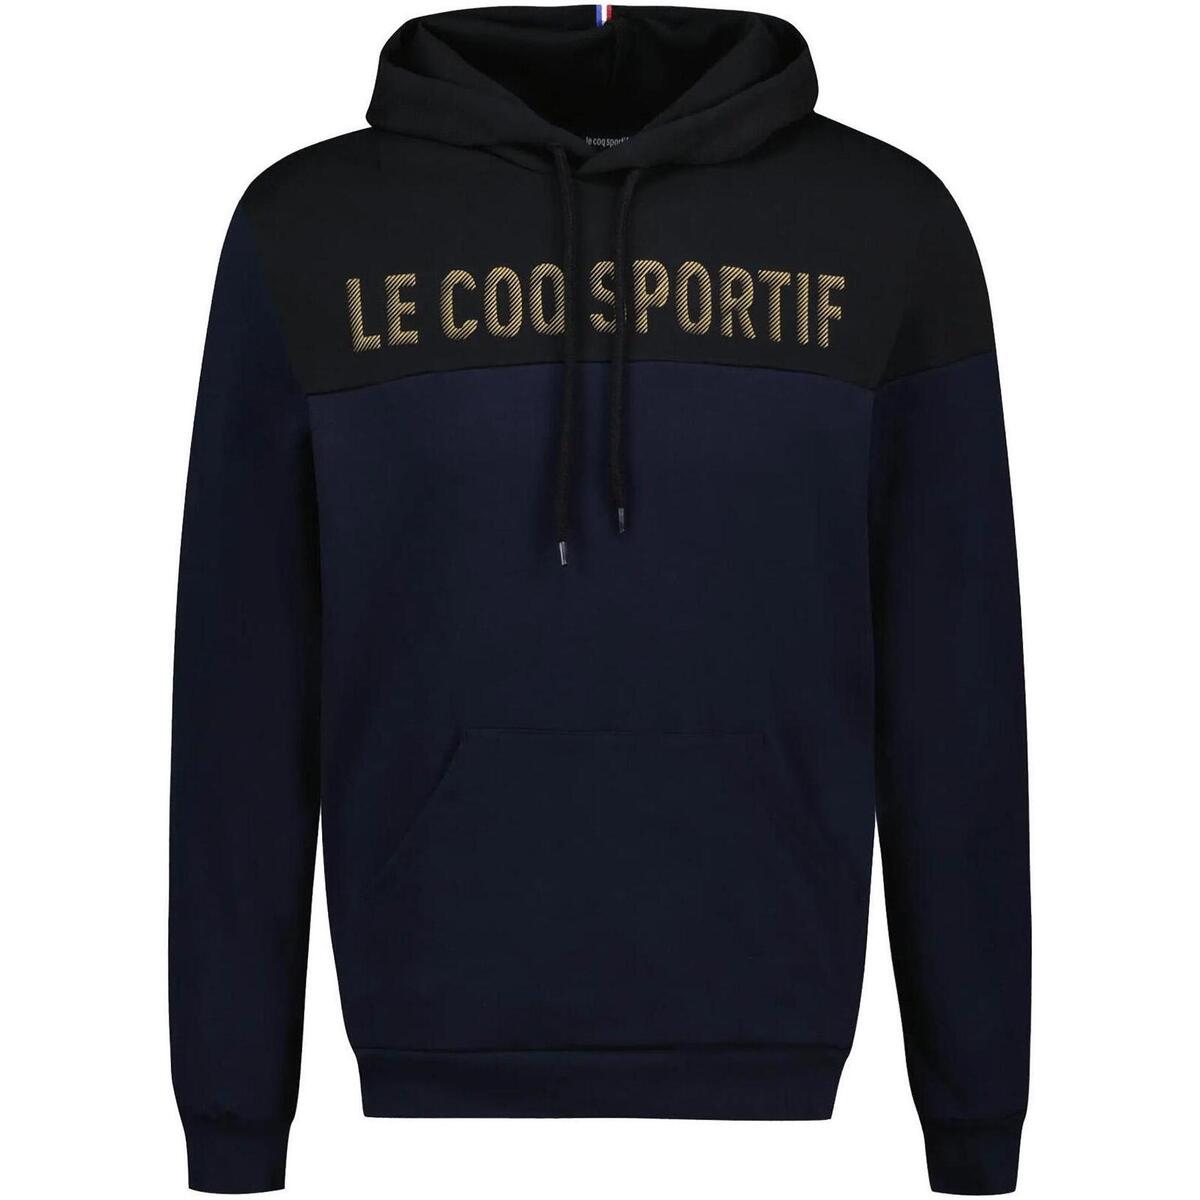 Vêtements Homme Sweats Le Coq Sportif Noel sp hoody n1 m sky captain/black Bleu